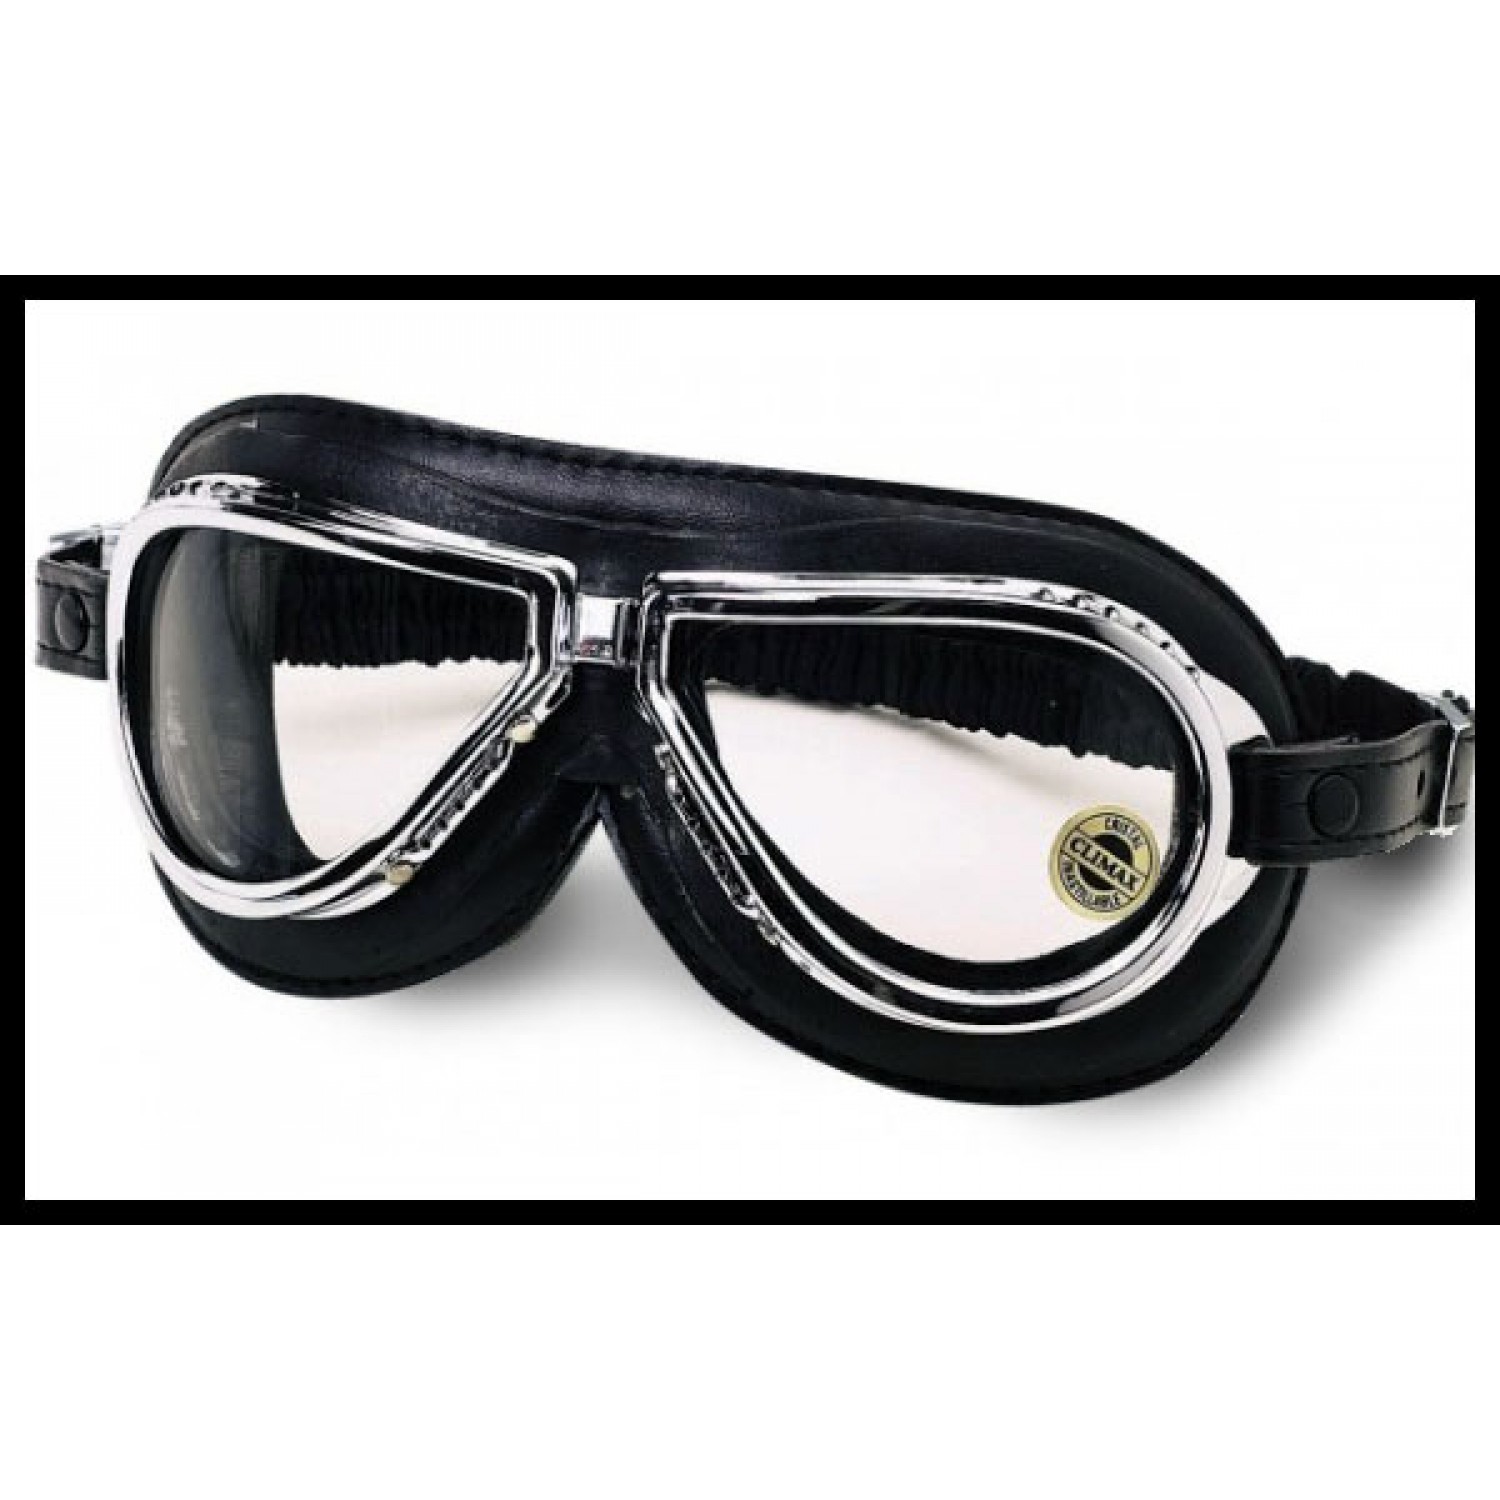 Lunettes Climax 521 - LU 02 Chaft moto : , lunette